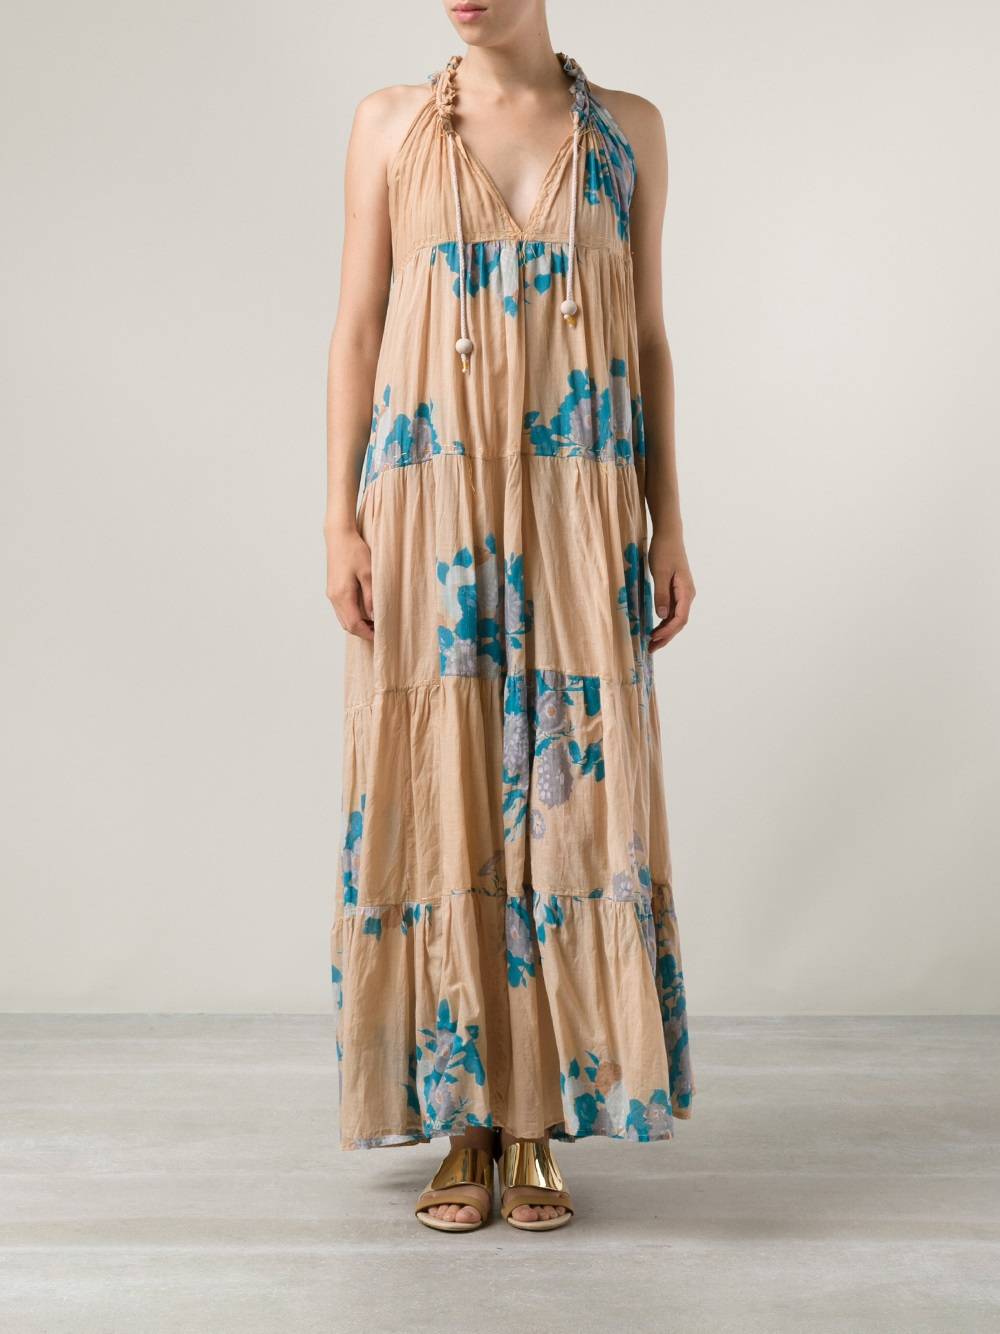 Lyst - Yvonne S Maxi Hippy Dress in Brown